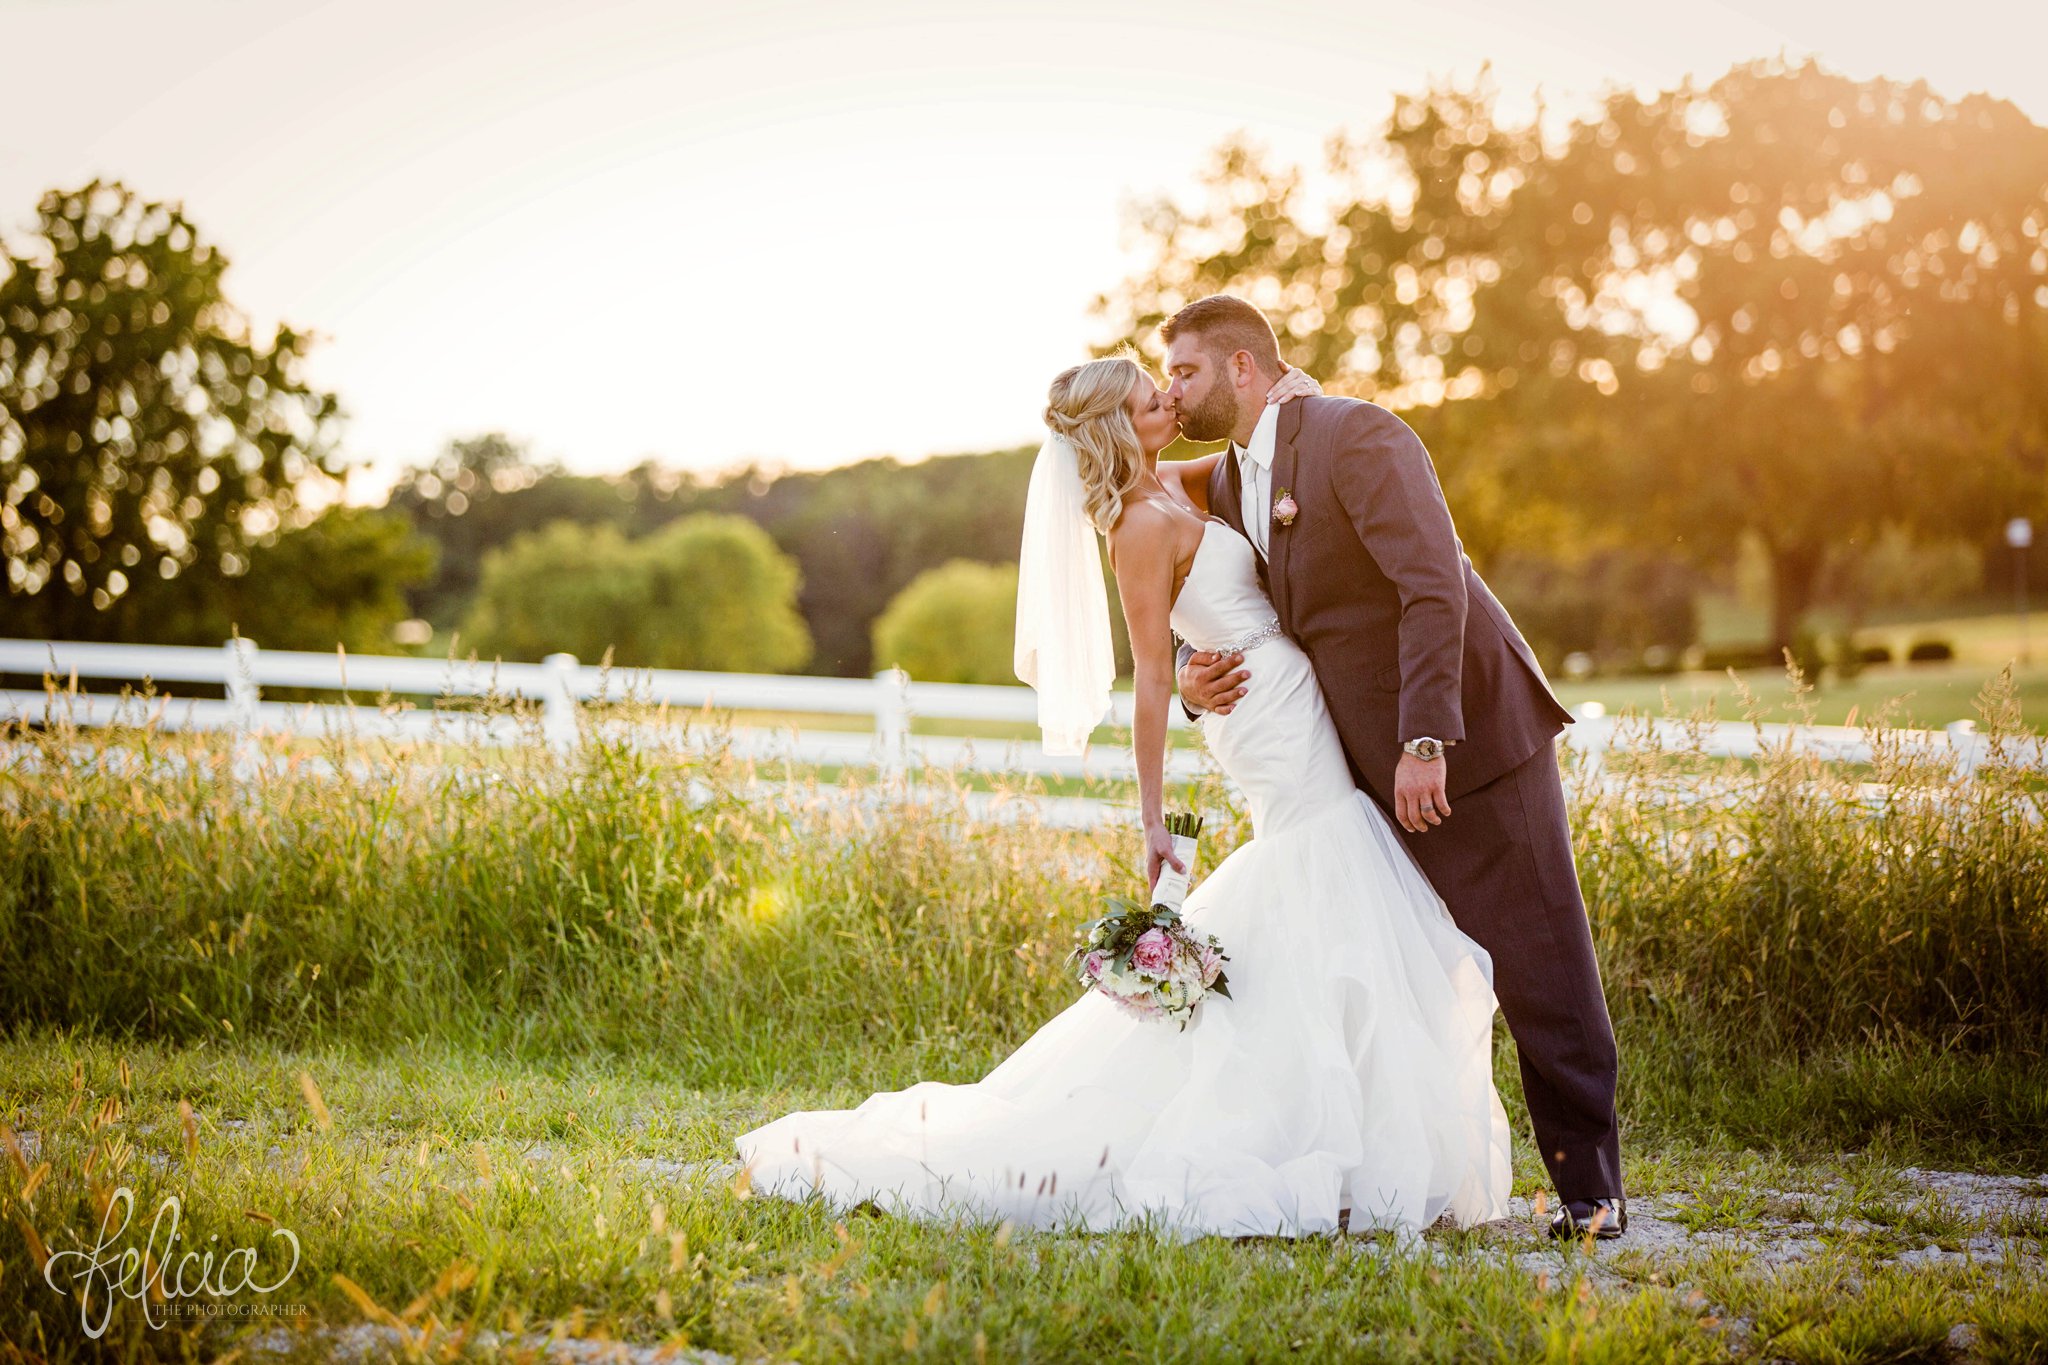 Bride and Groom | Photography | Sunset | Golden Hour | White Pickett Fence | Eighteen Ninety | Kansas City Wedding Venue | Felicia The Photographer